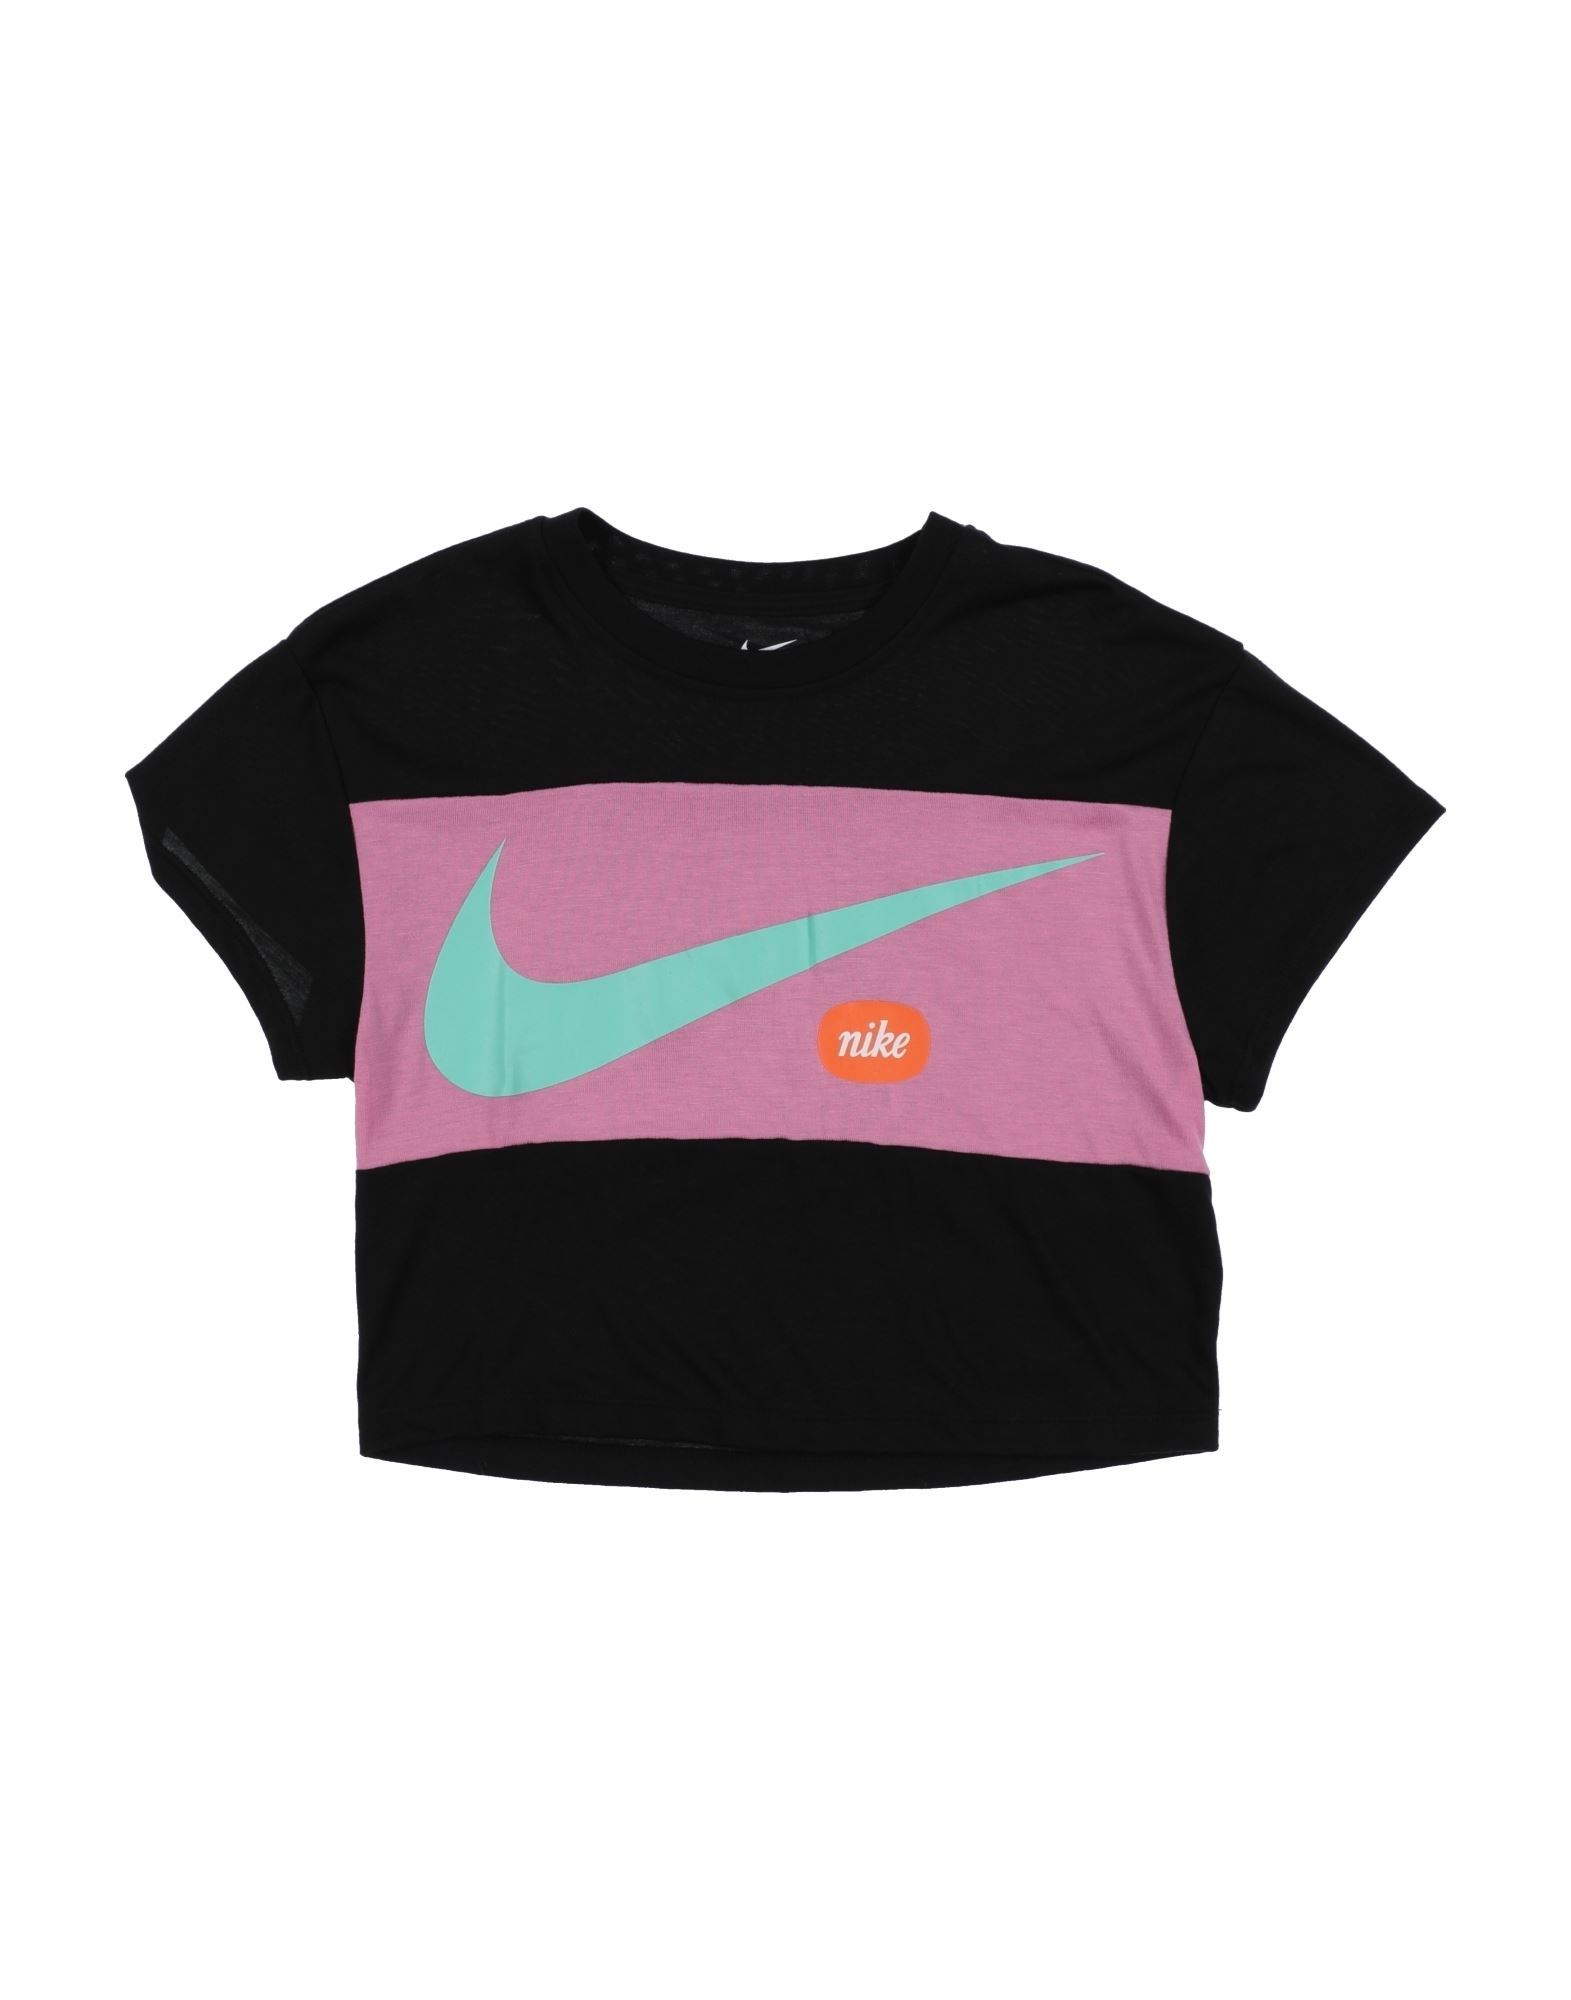 Nike Kids' T-shirts In Black